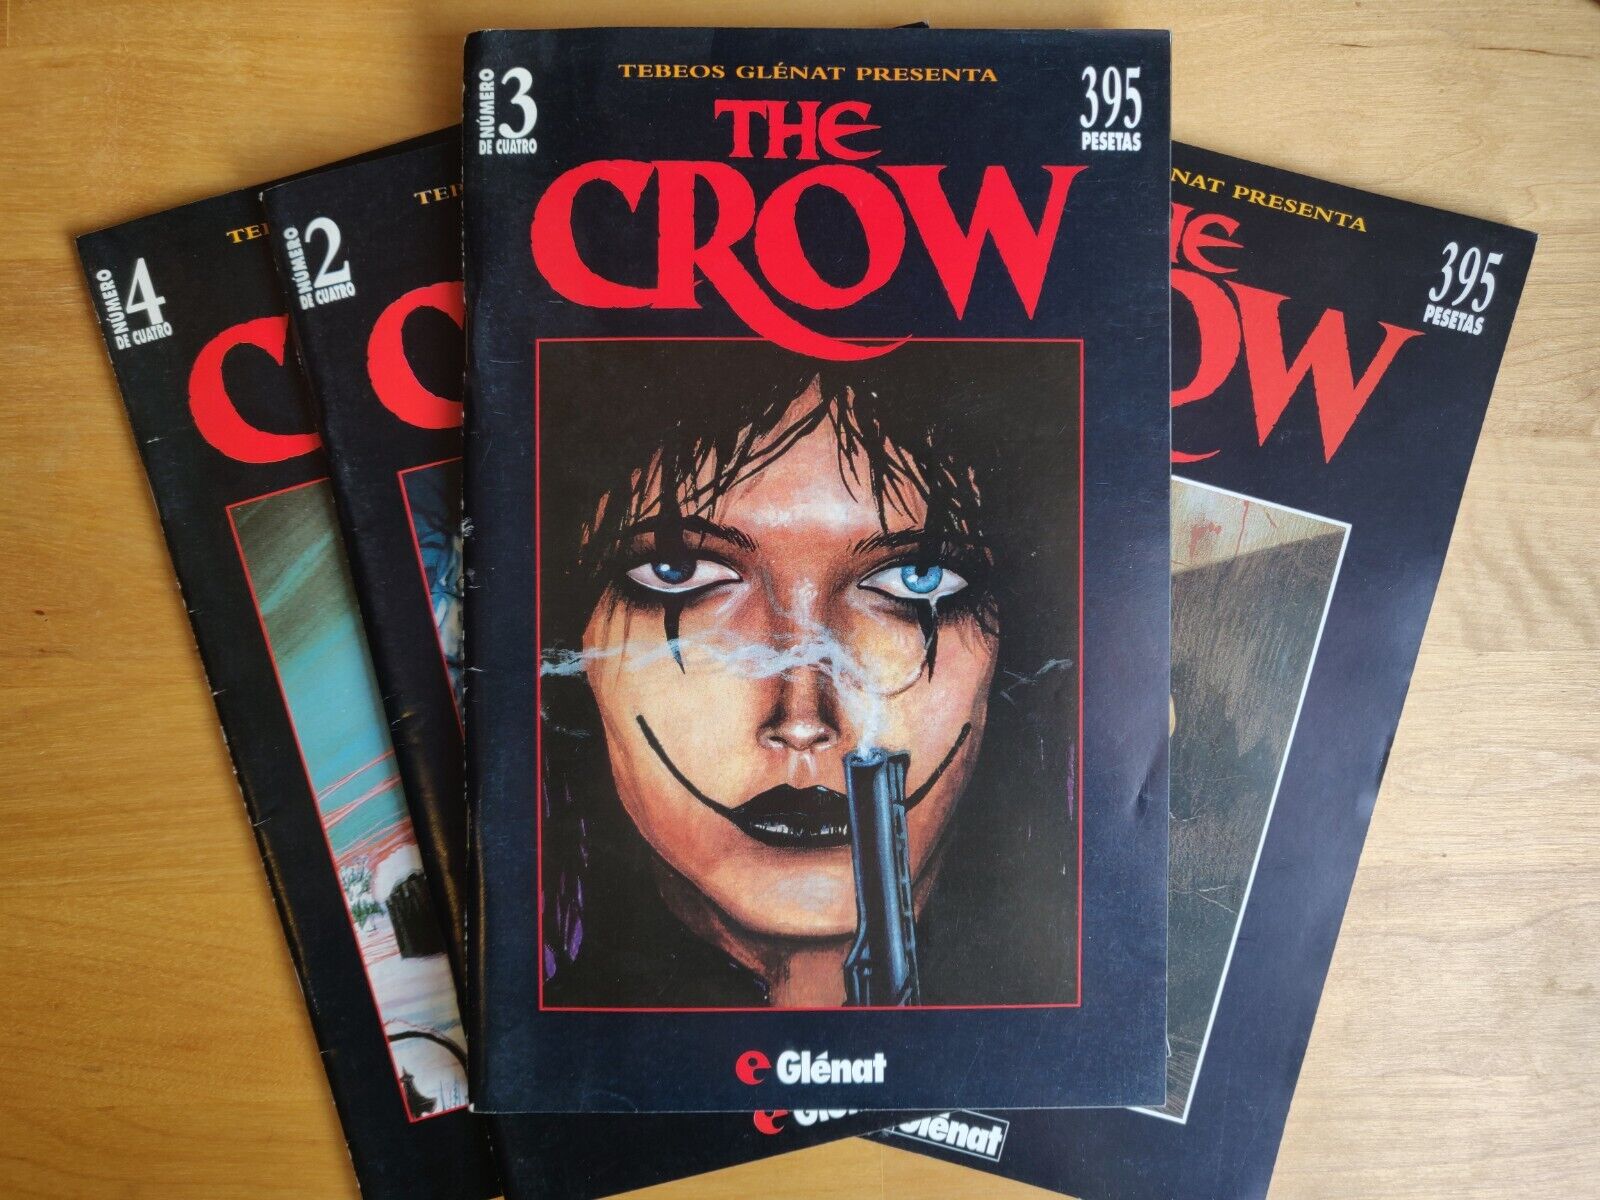 THE CROW #1 - RARE Spanish Edition - SET OF 4 Complete 1st Print Glenat O'BARR